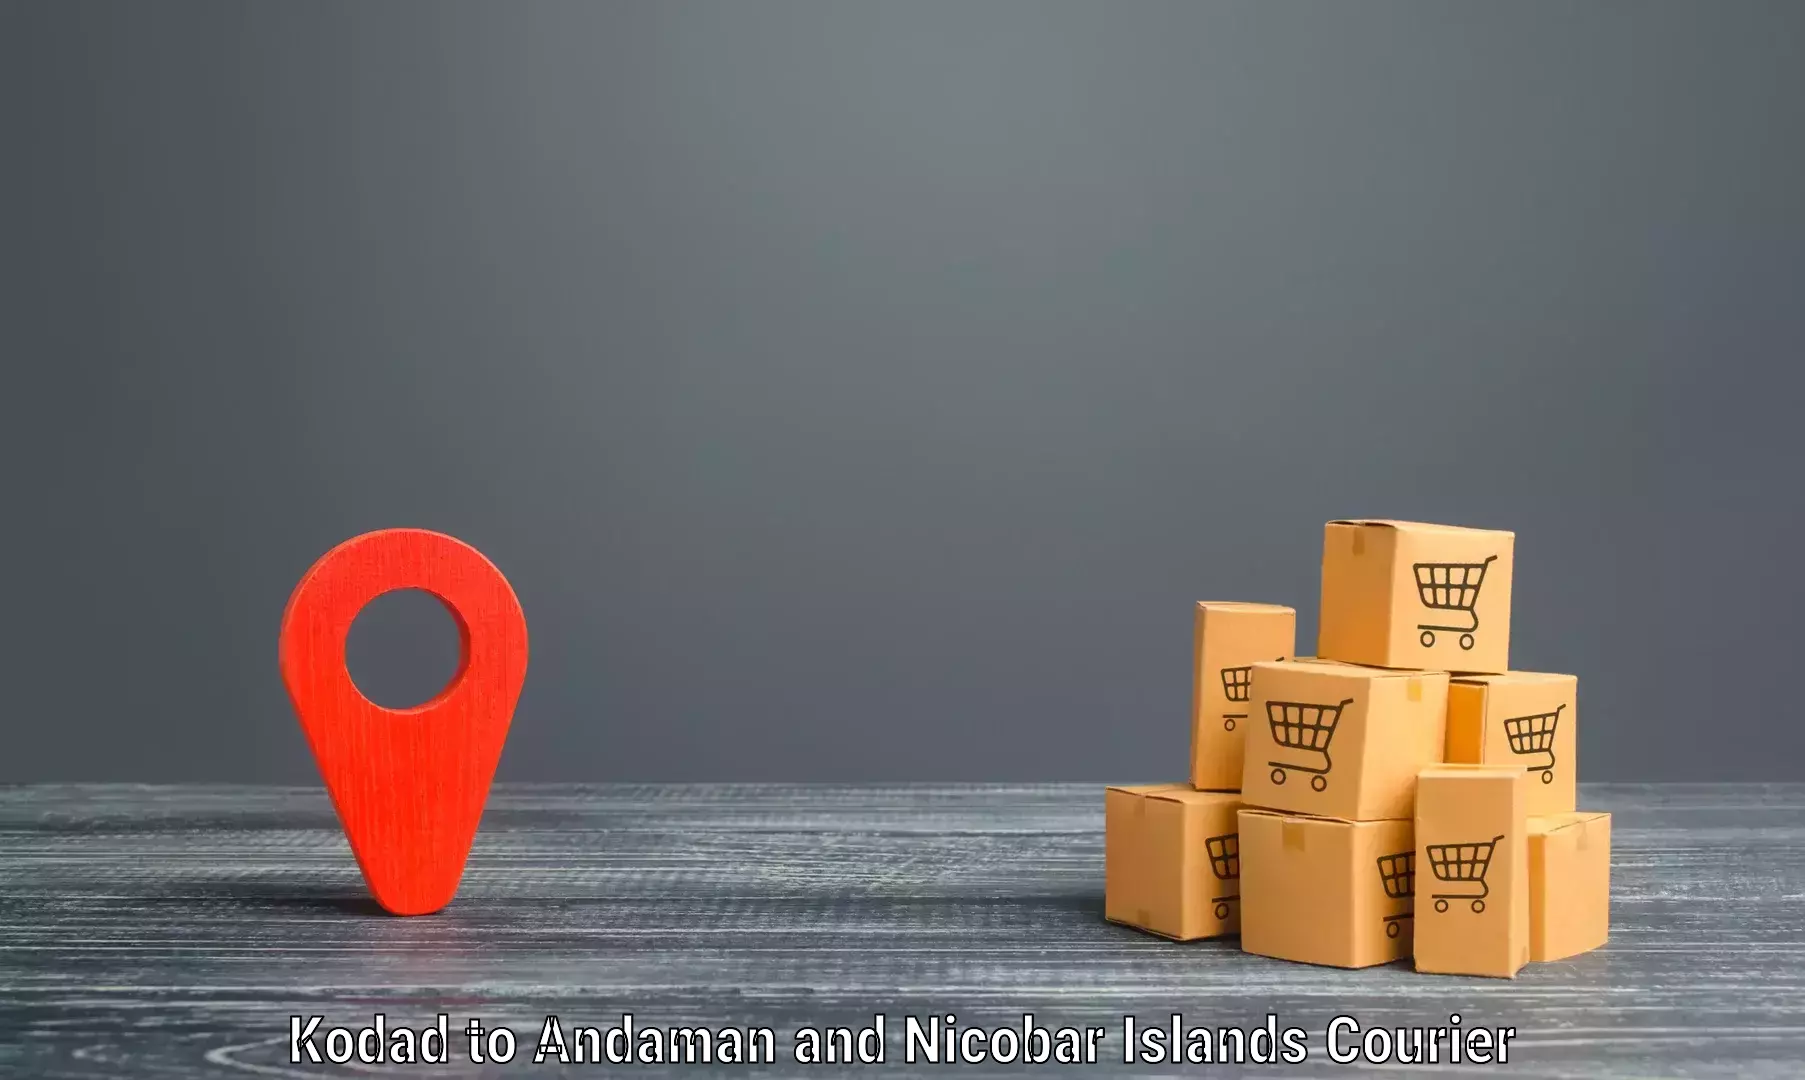 Express courier facilities in Kodad to Andaman and Nicobar Islands